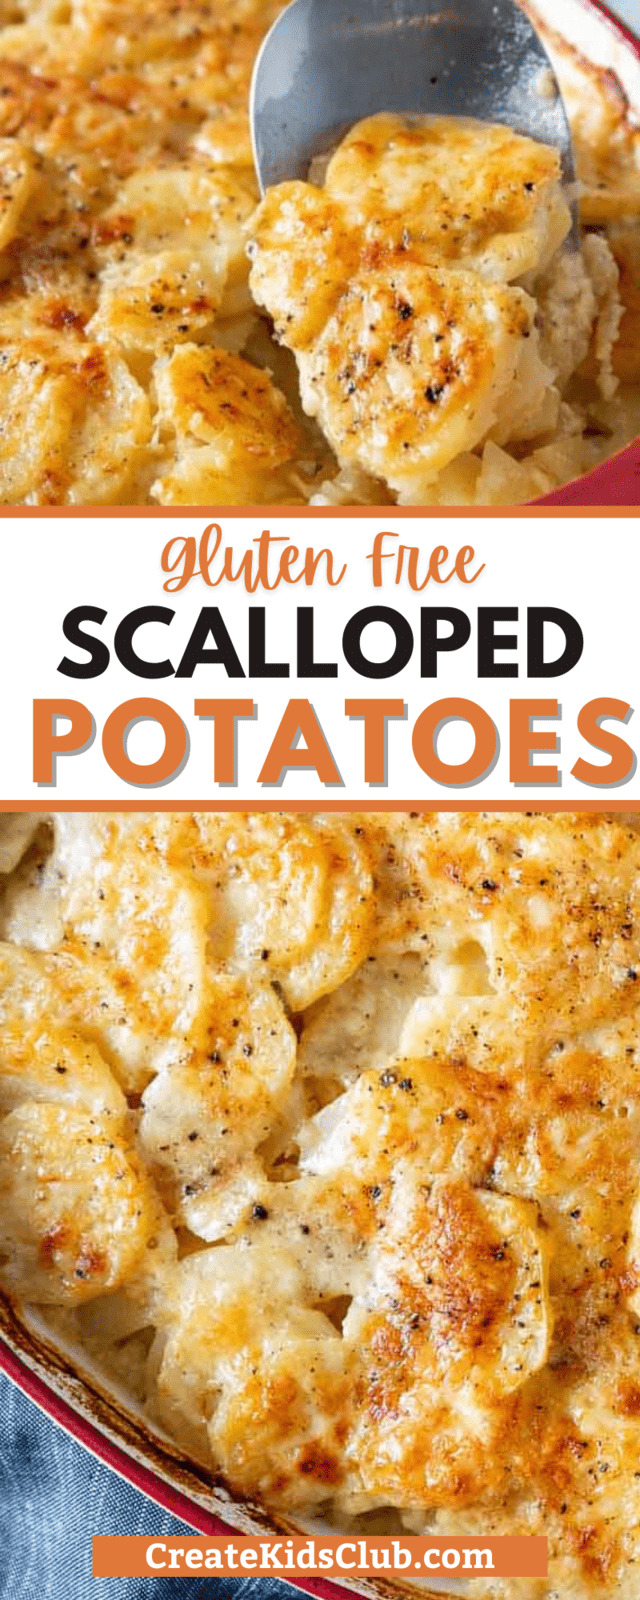 GF Scalloped Potatoes